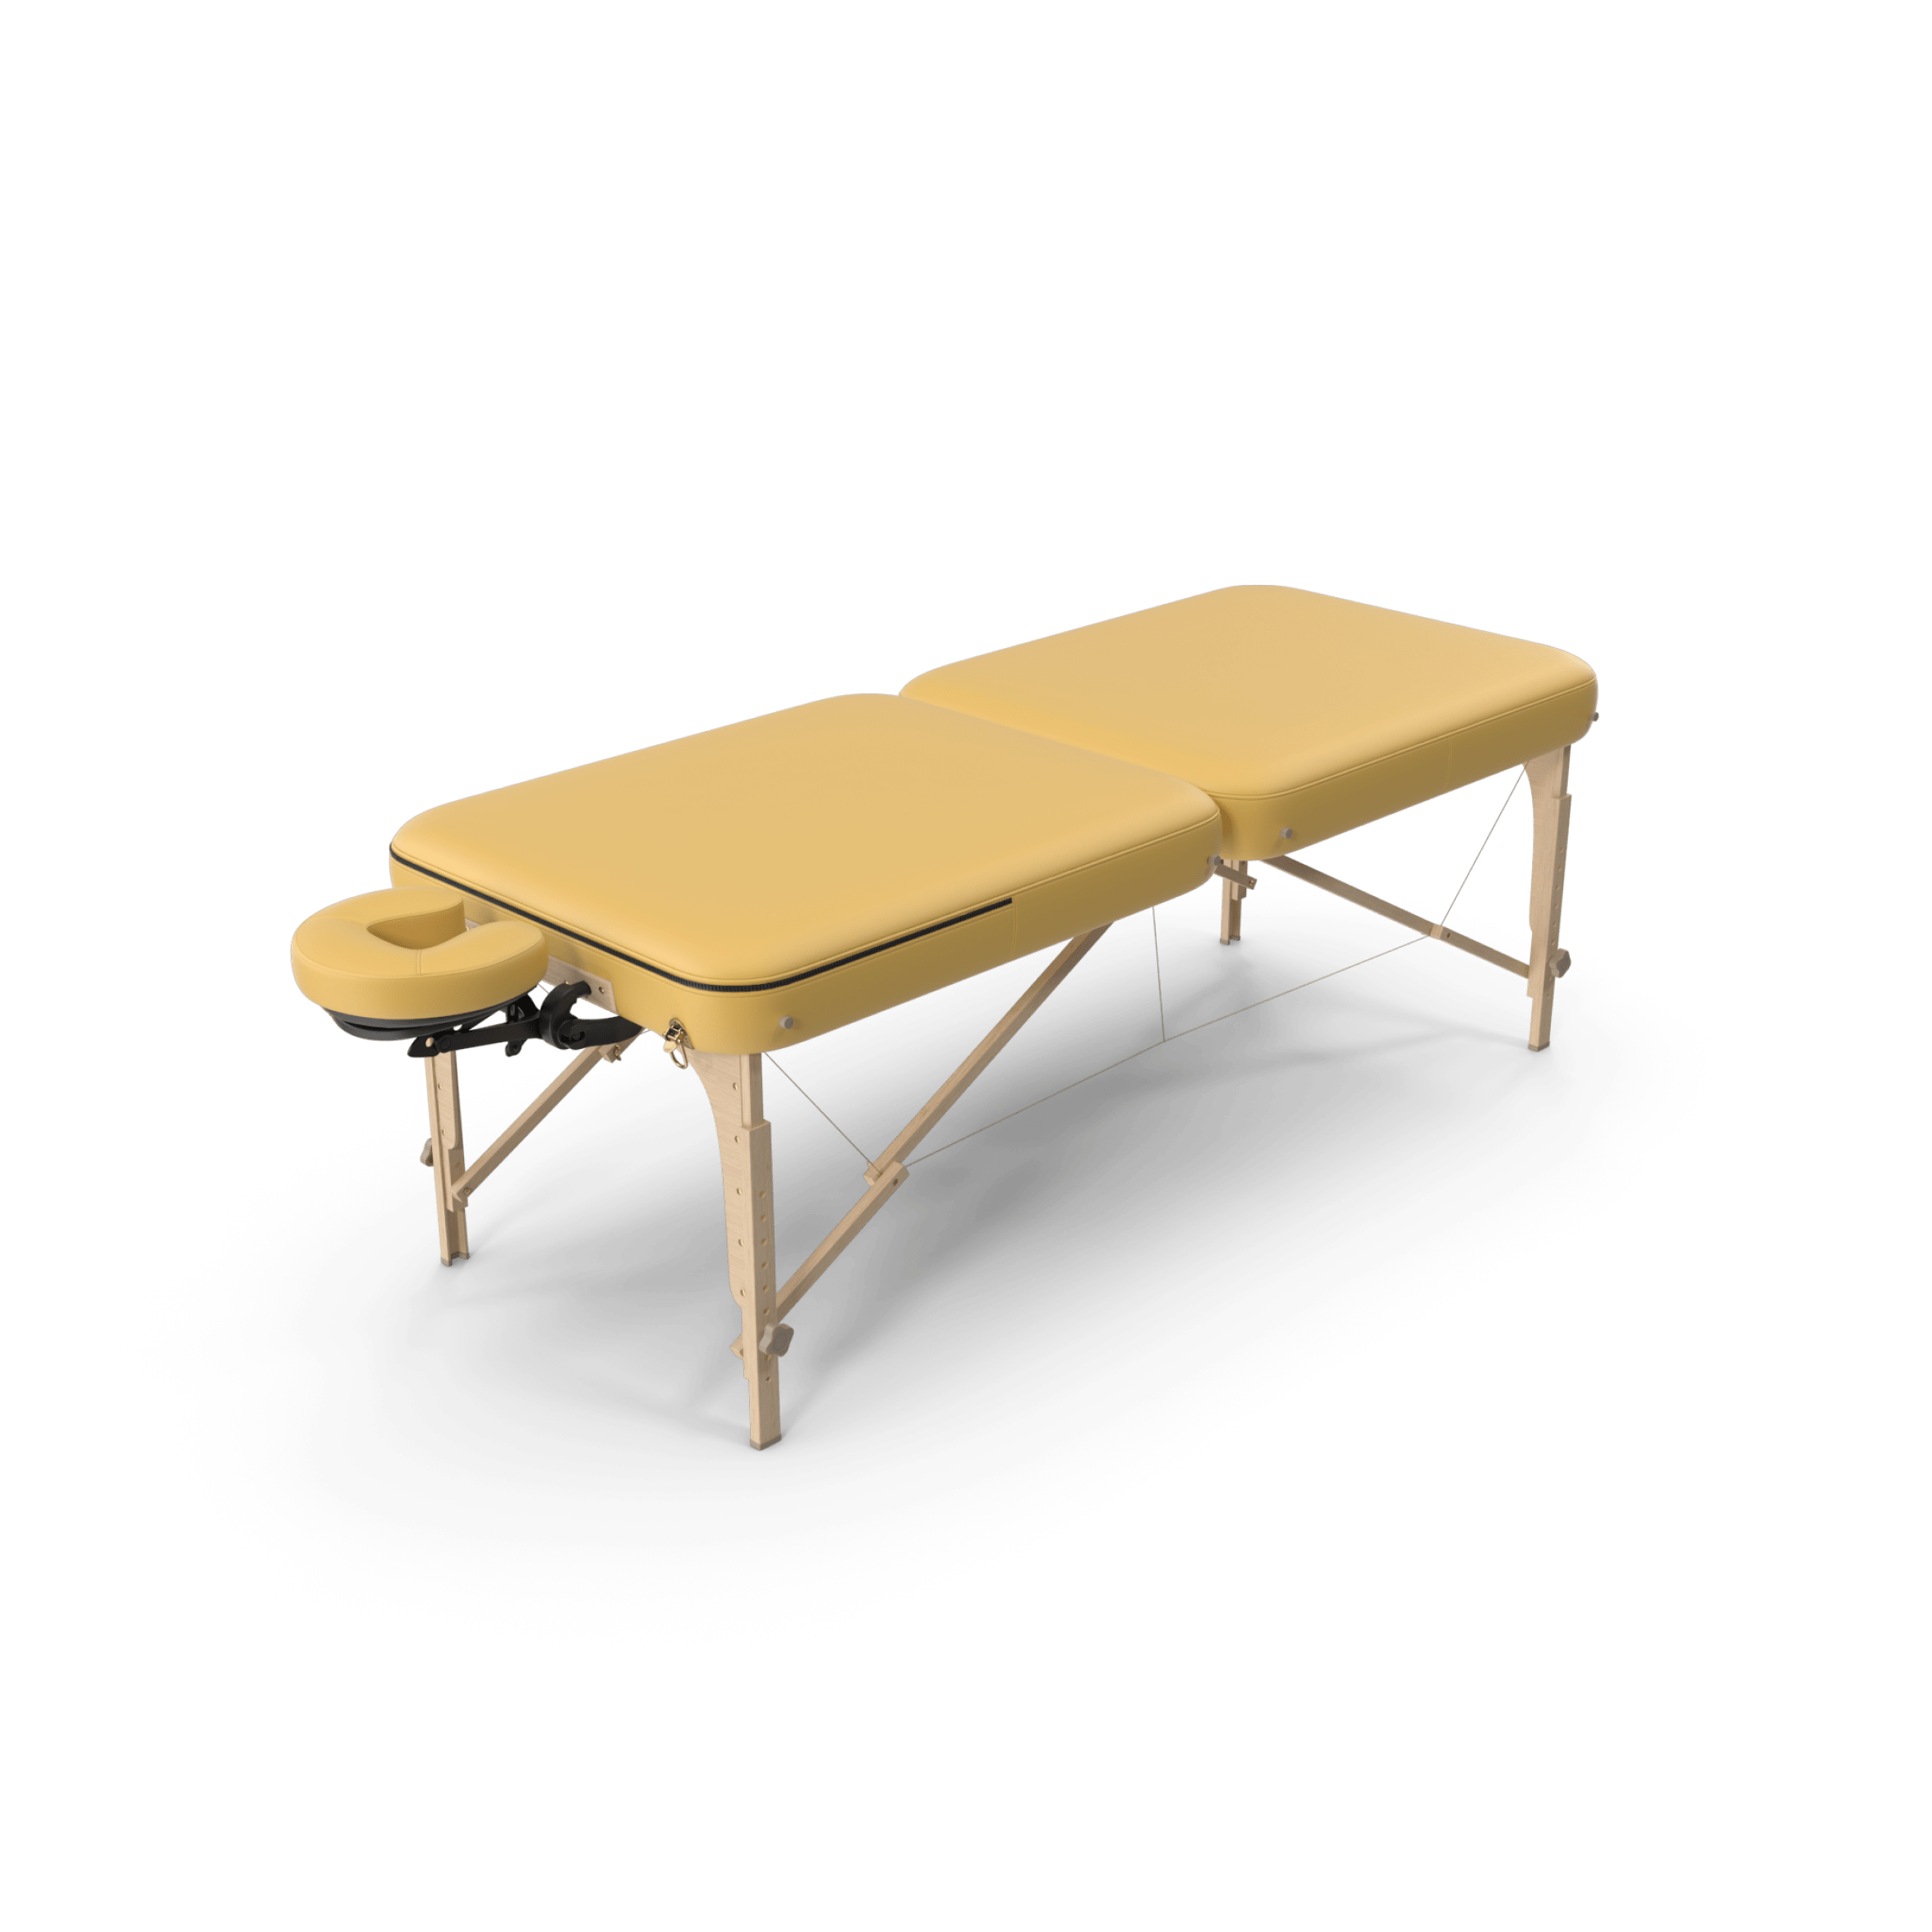 Чехол на массажный стол. Массажный стол складной body Sculpture BM-1310. Массажный стол Ямагучи Киото. Массажный стол кожзам.